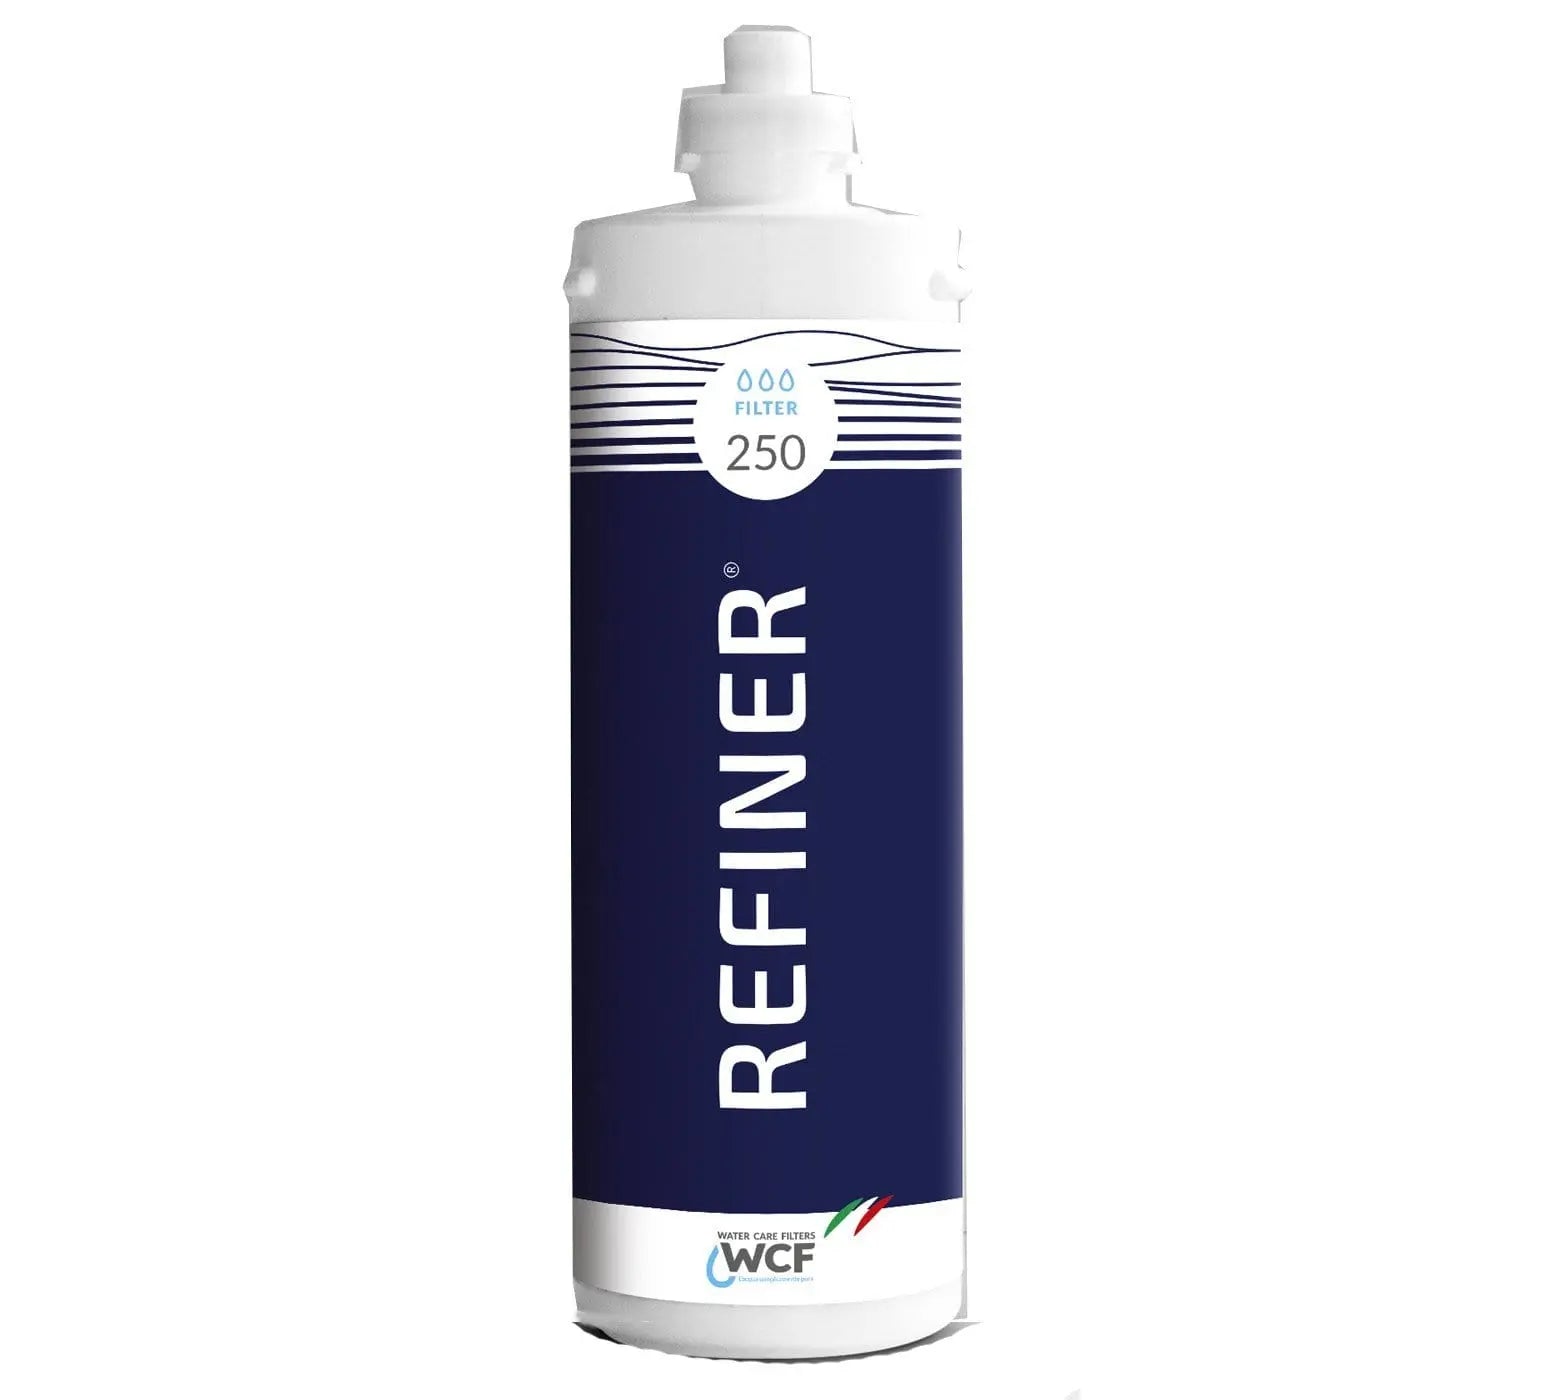 Filtro per acqua Refiner Wcf R11079 Rapid System WCF